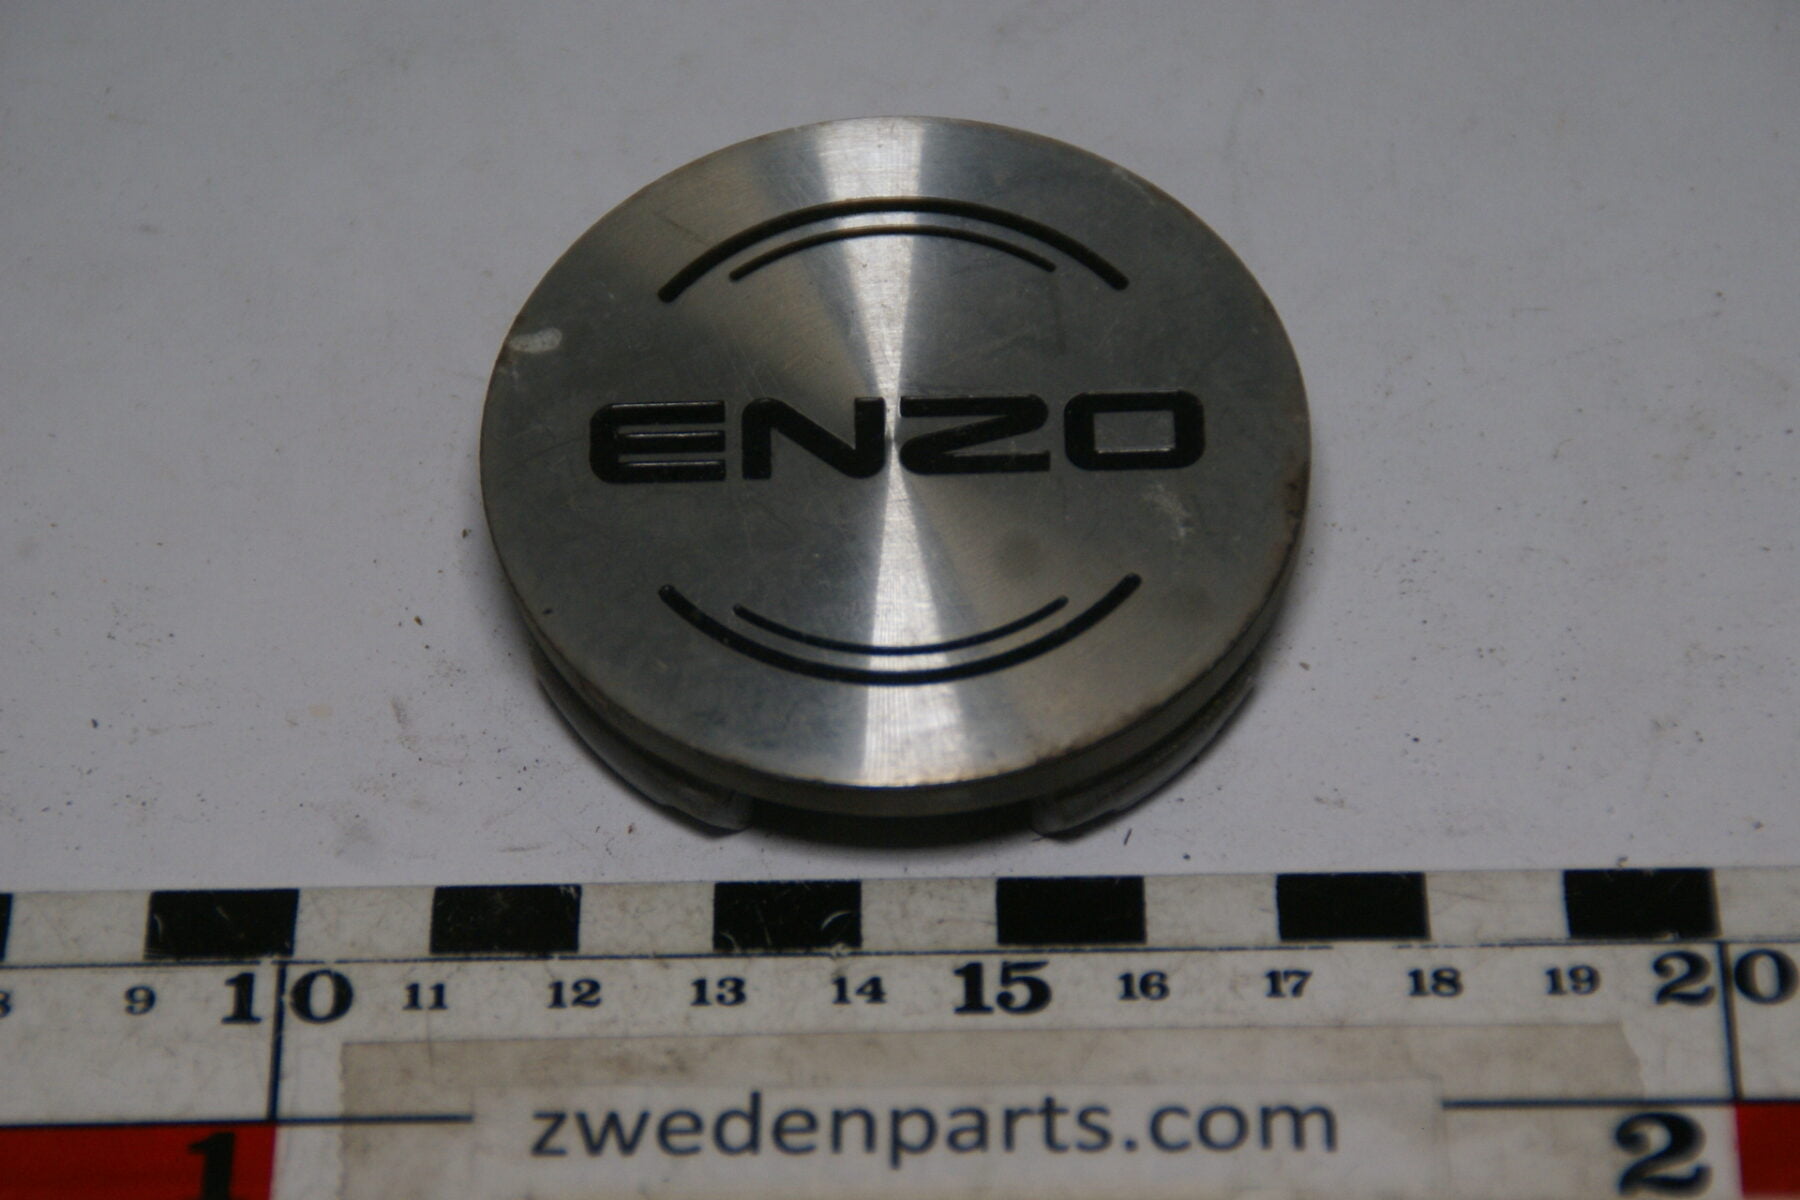 DSC00078 origineel naafdop ENZO nr ZA1327-ed75e989